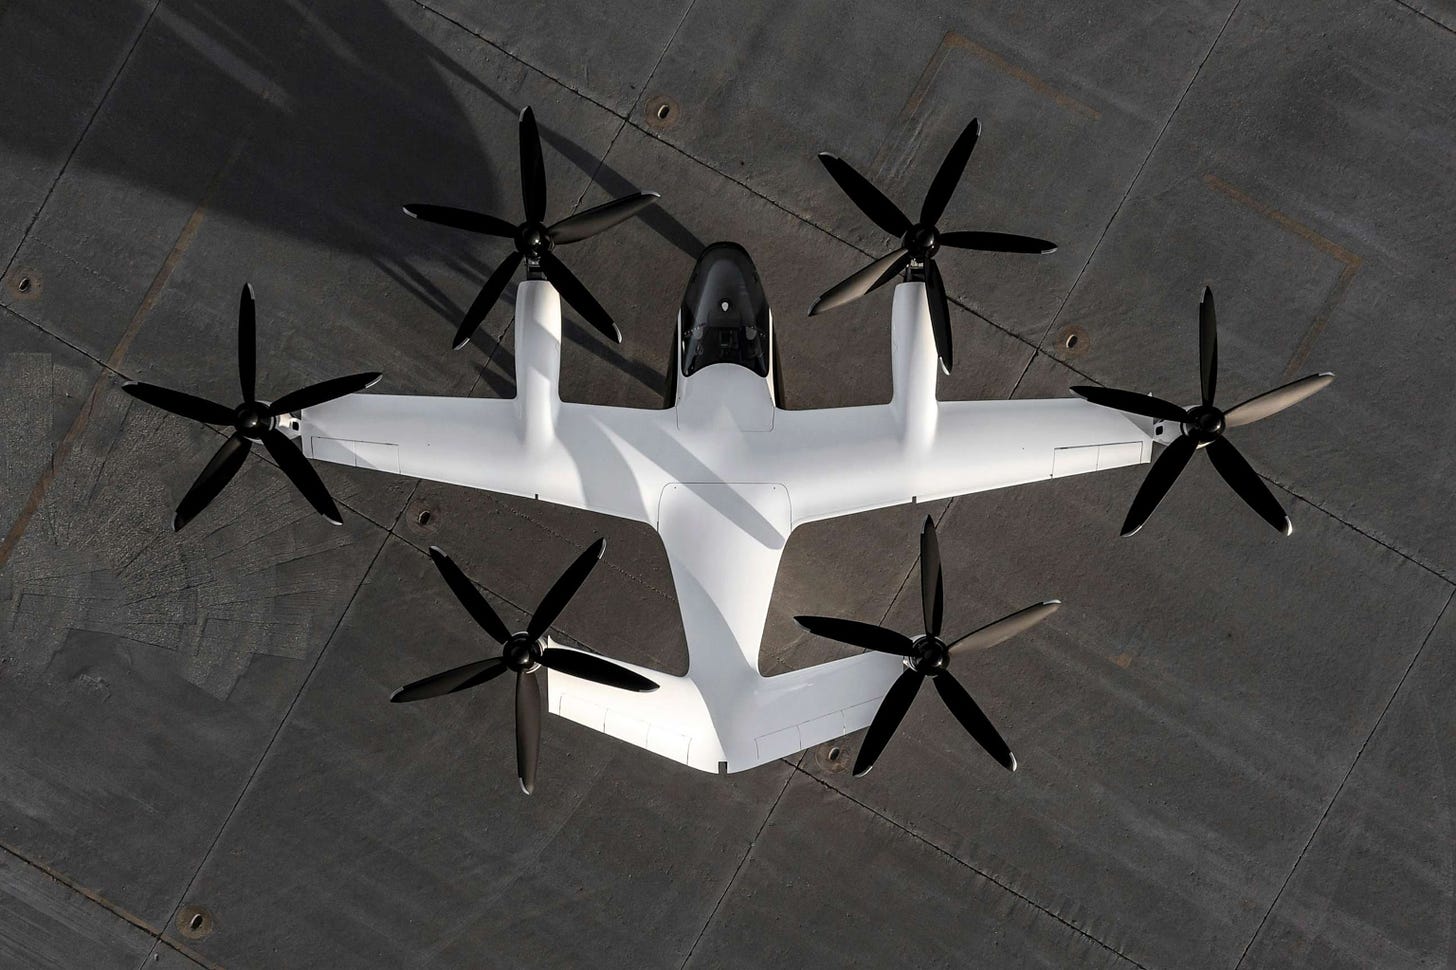 PHOTO: Joby Aviation's pre-production prototype aircraft at the company's facilities in Marina, Calif. in 2022.